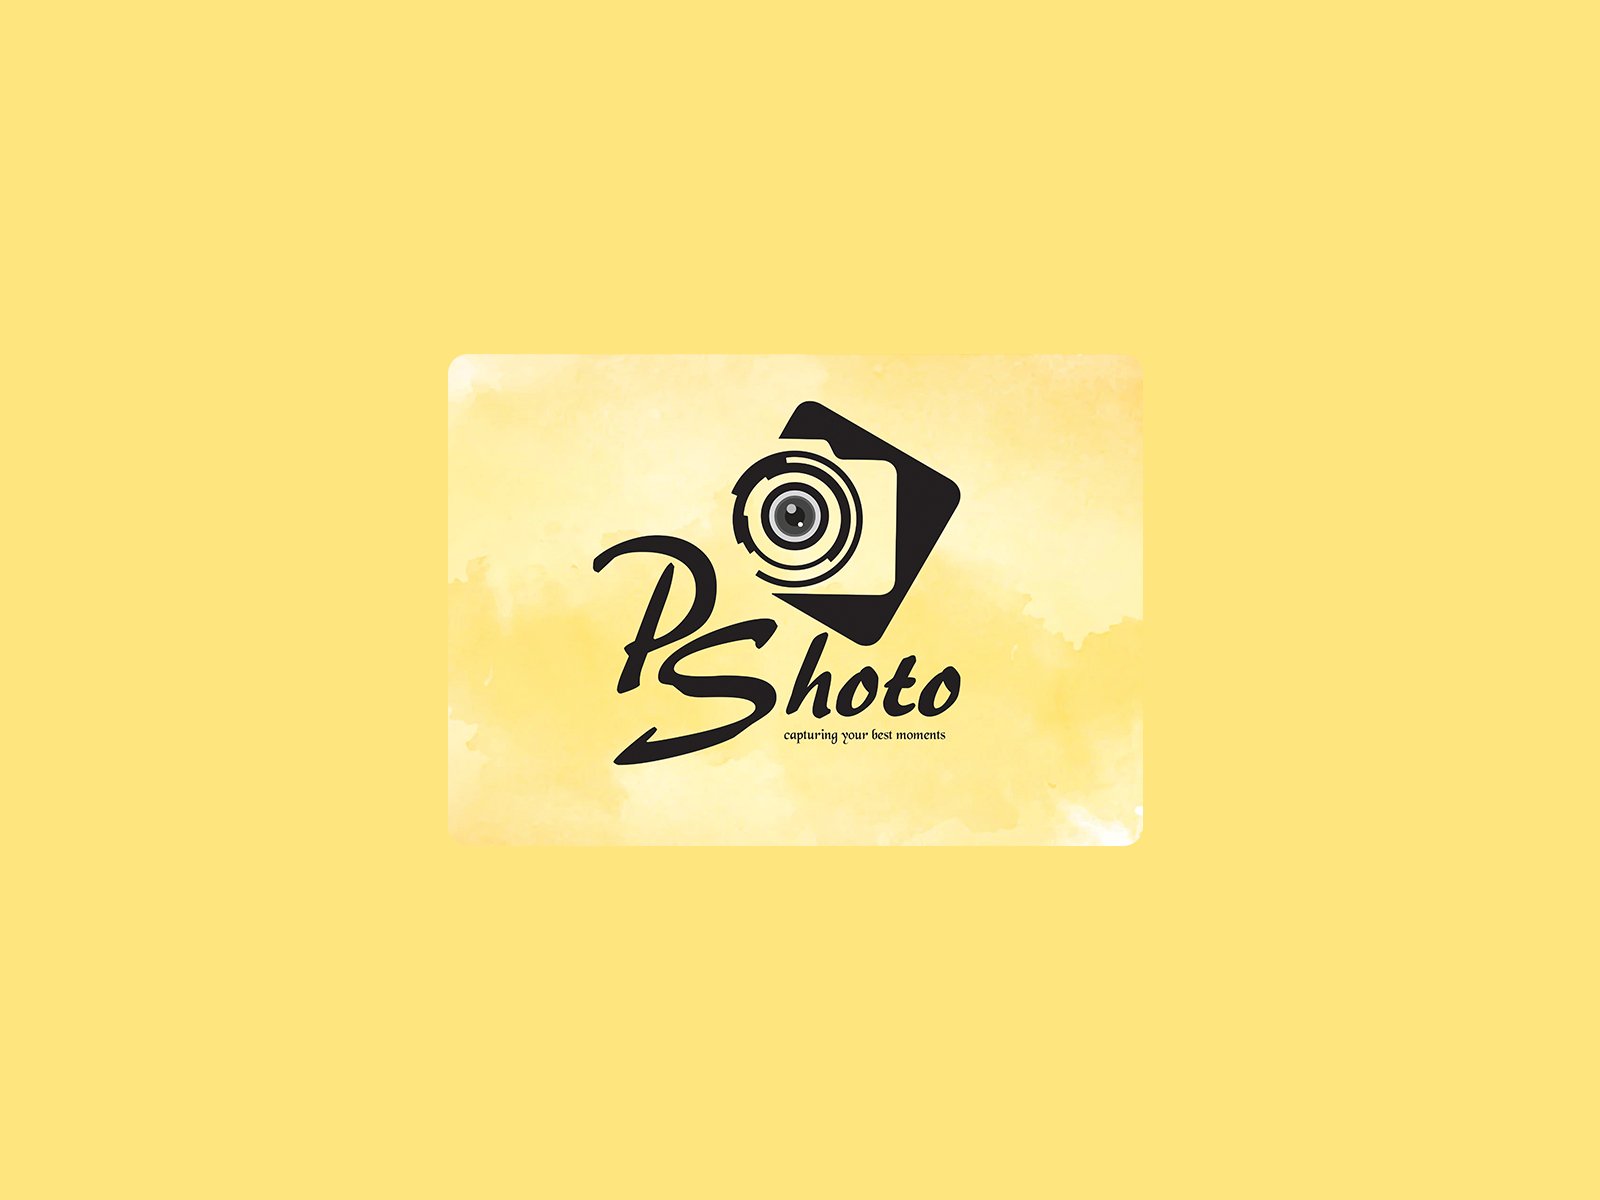 PShoto Brand Logo Design